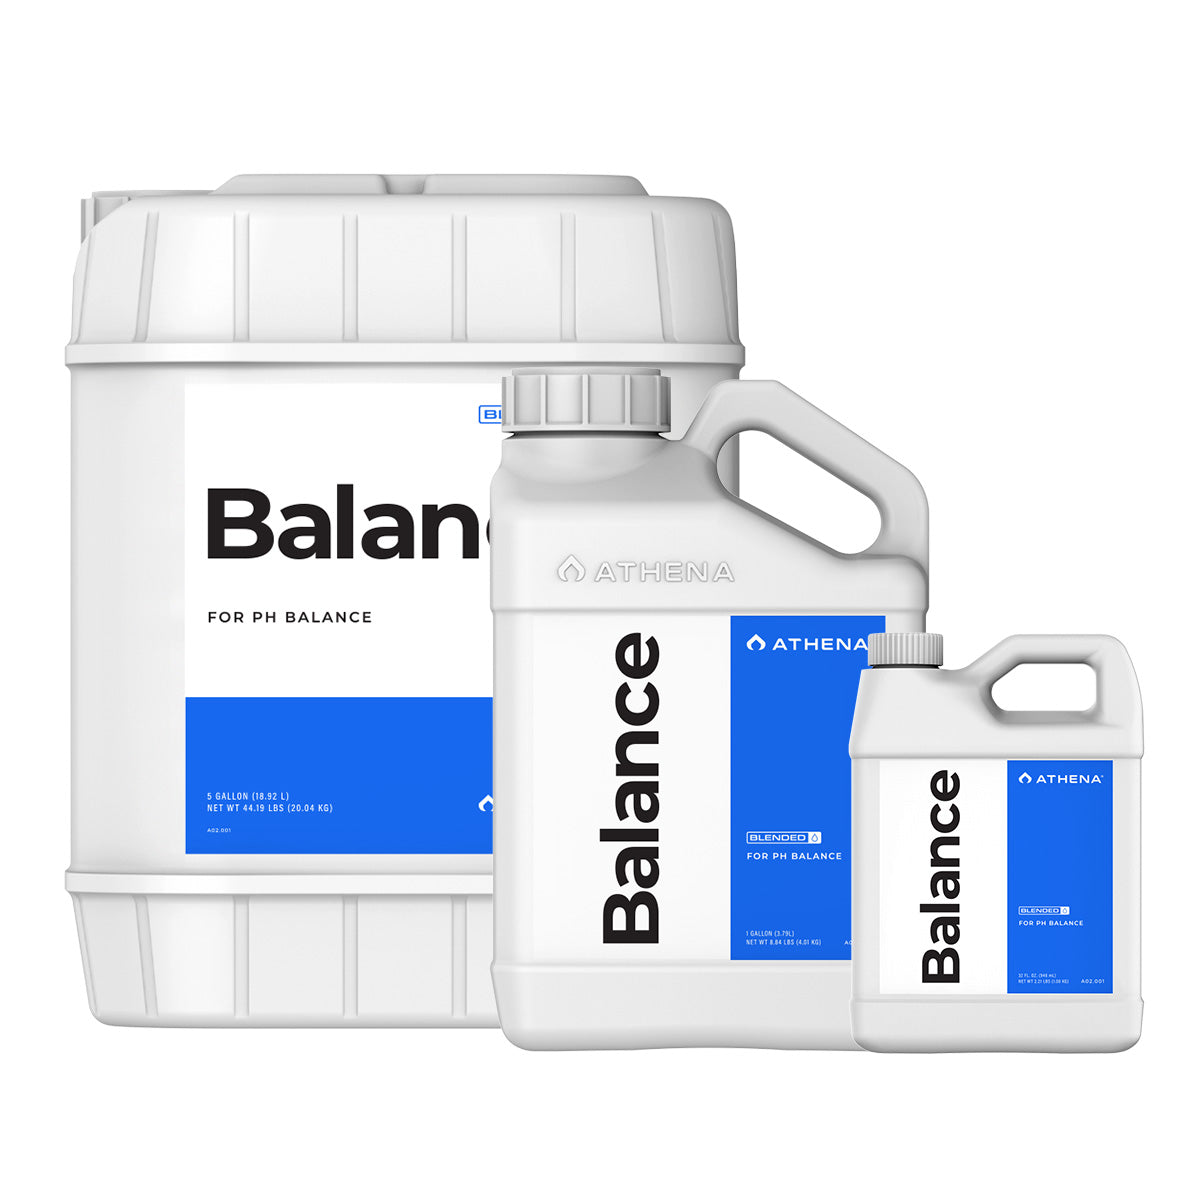 Athena Nutrients - Blended Line - Balance